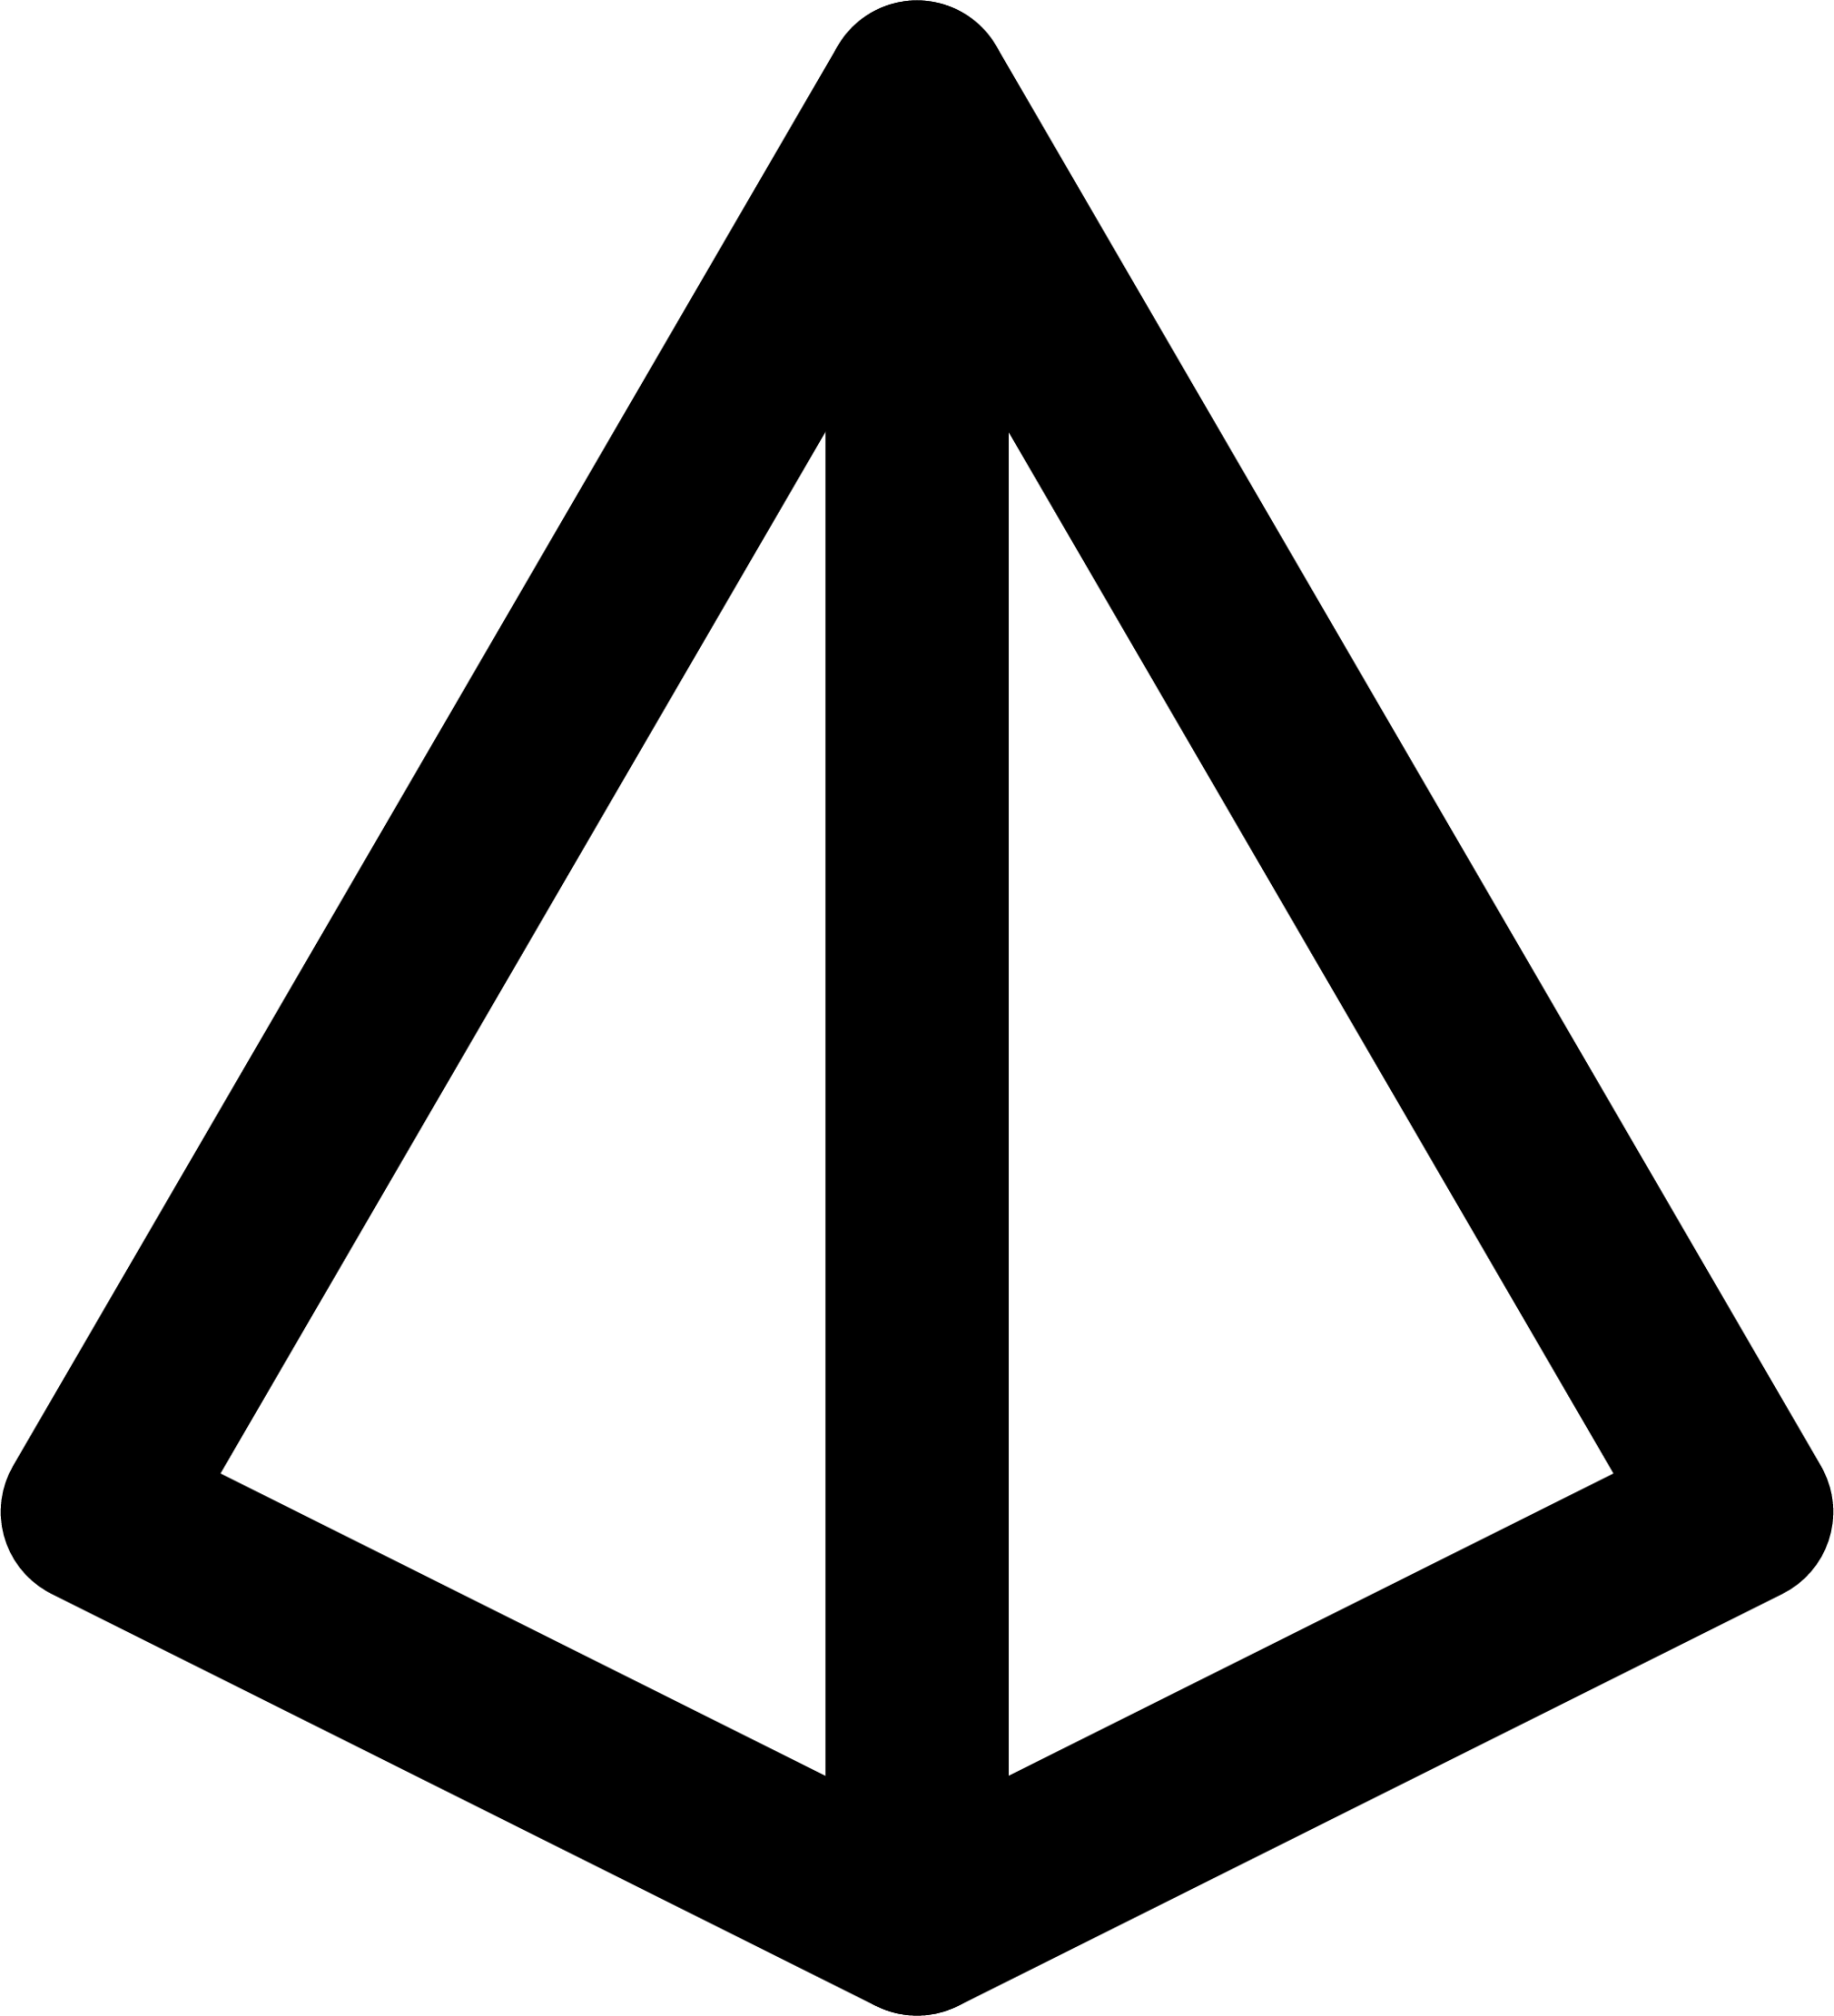 triangular pyramid icon